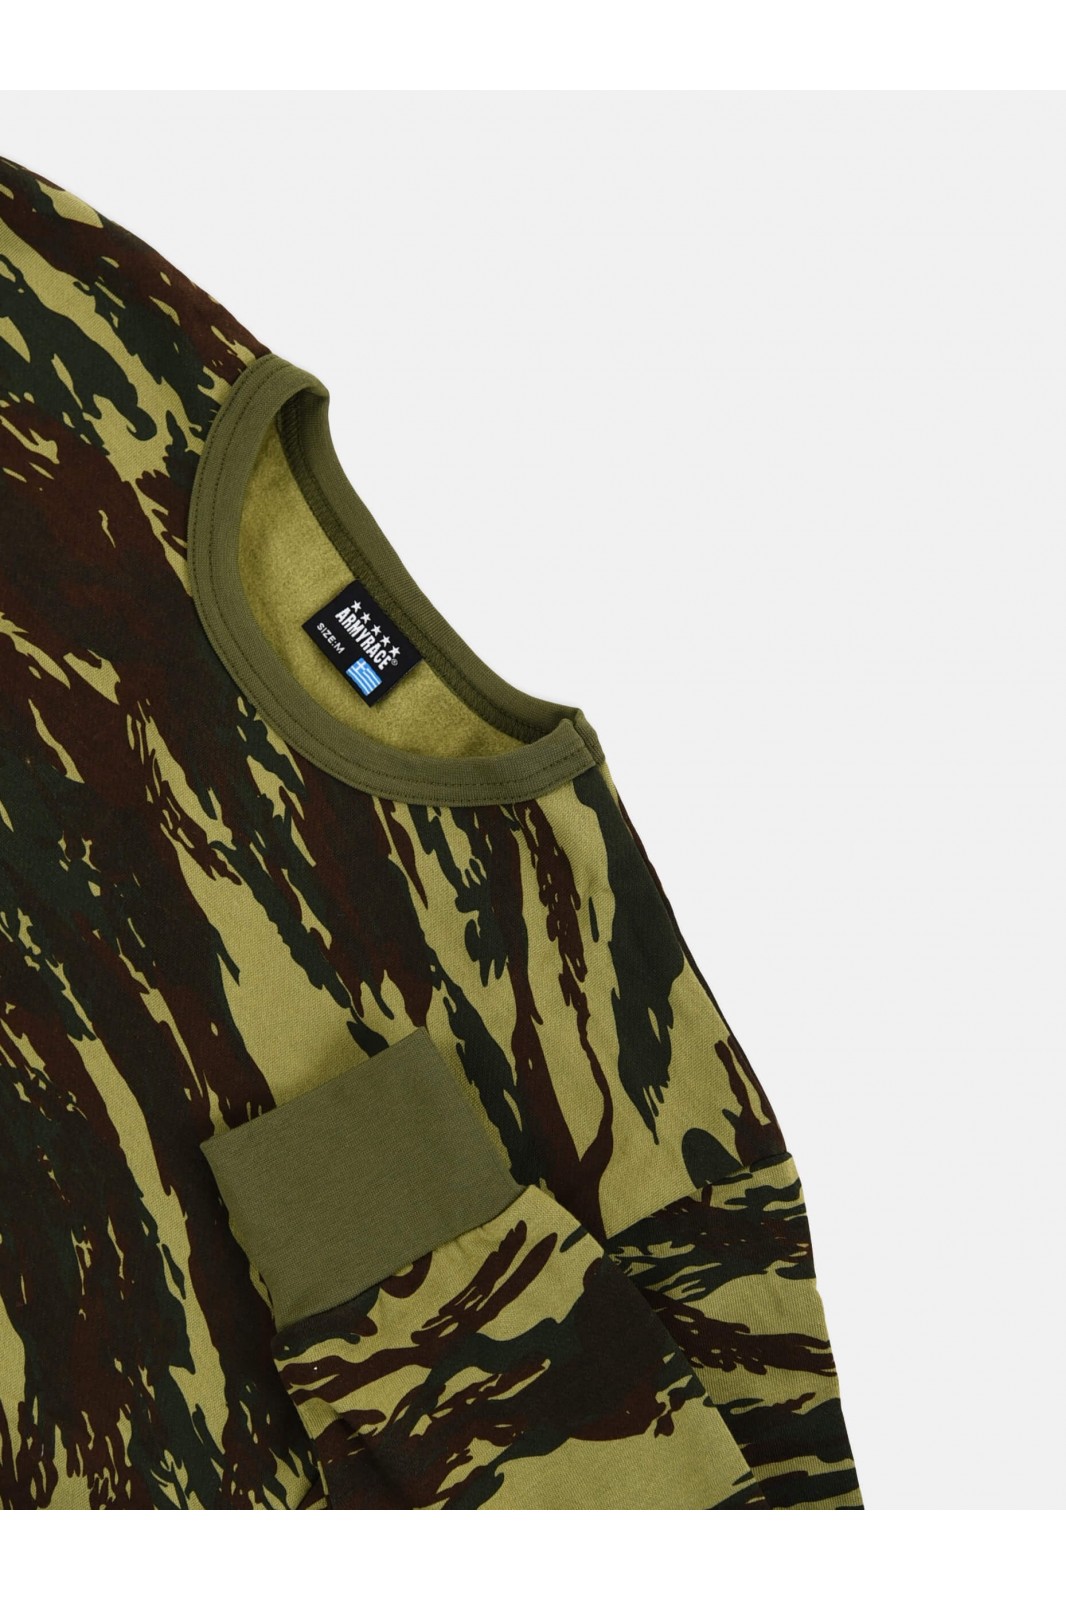 Greek camouflage sweatshirt ARMY RACE